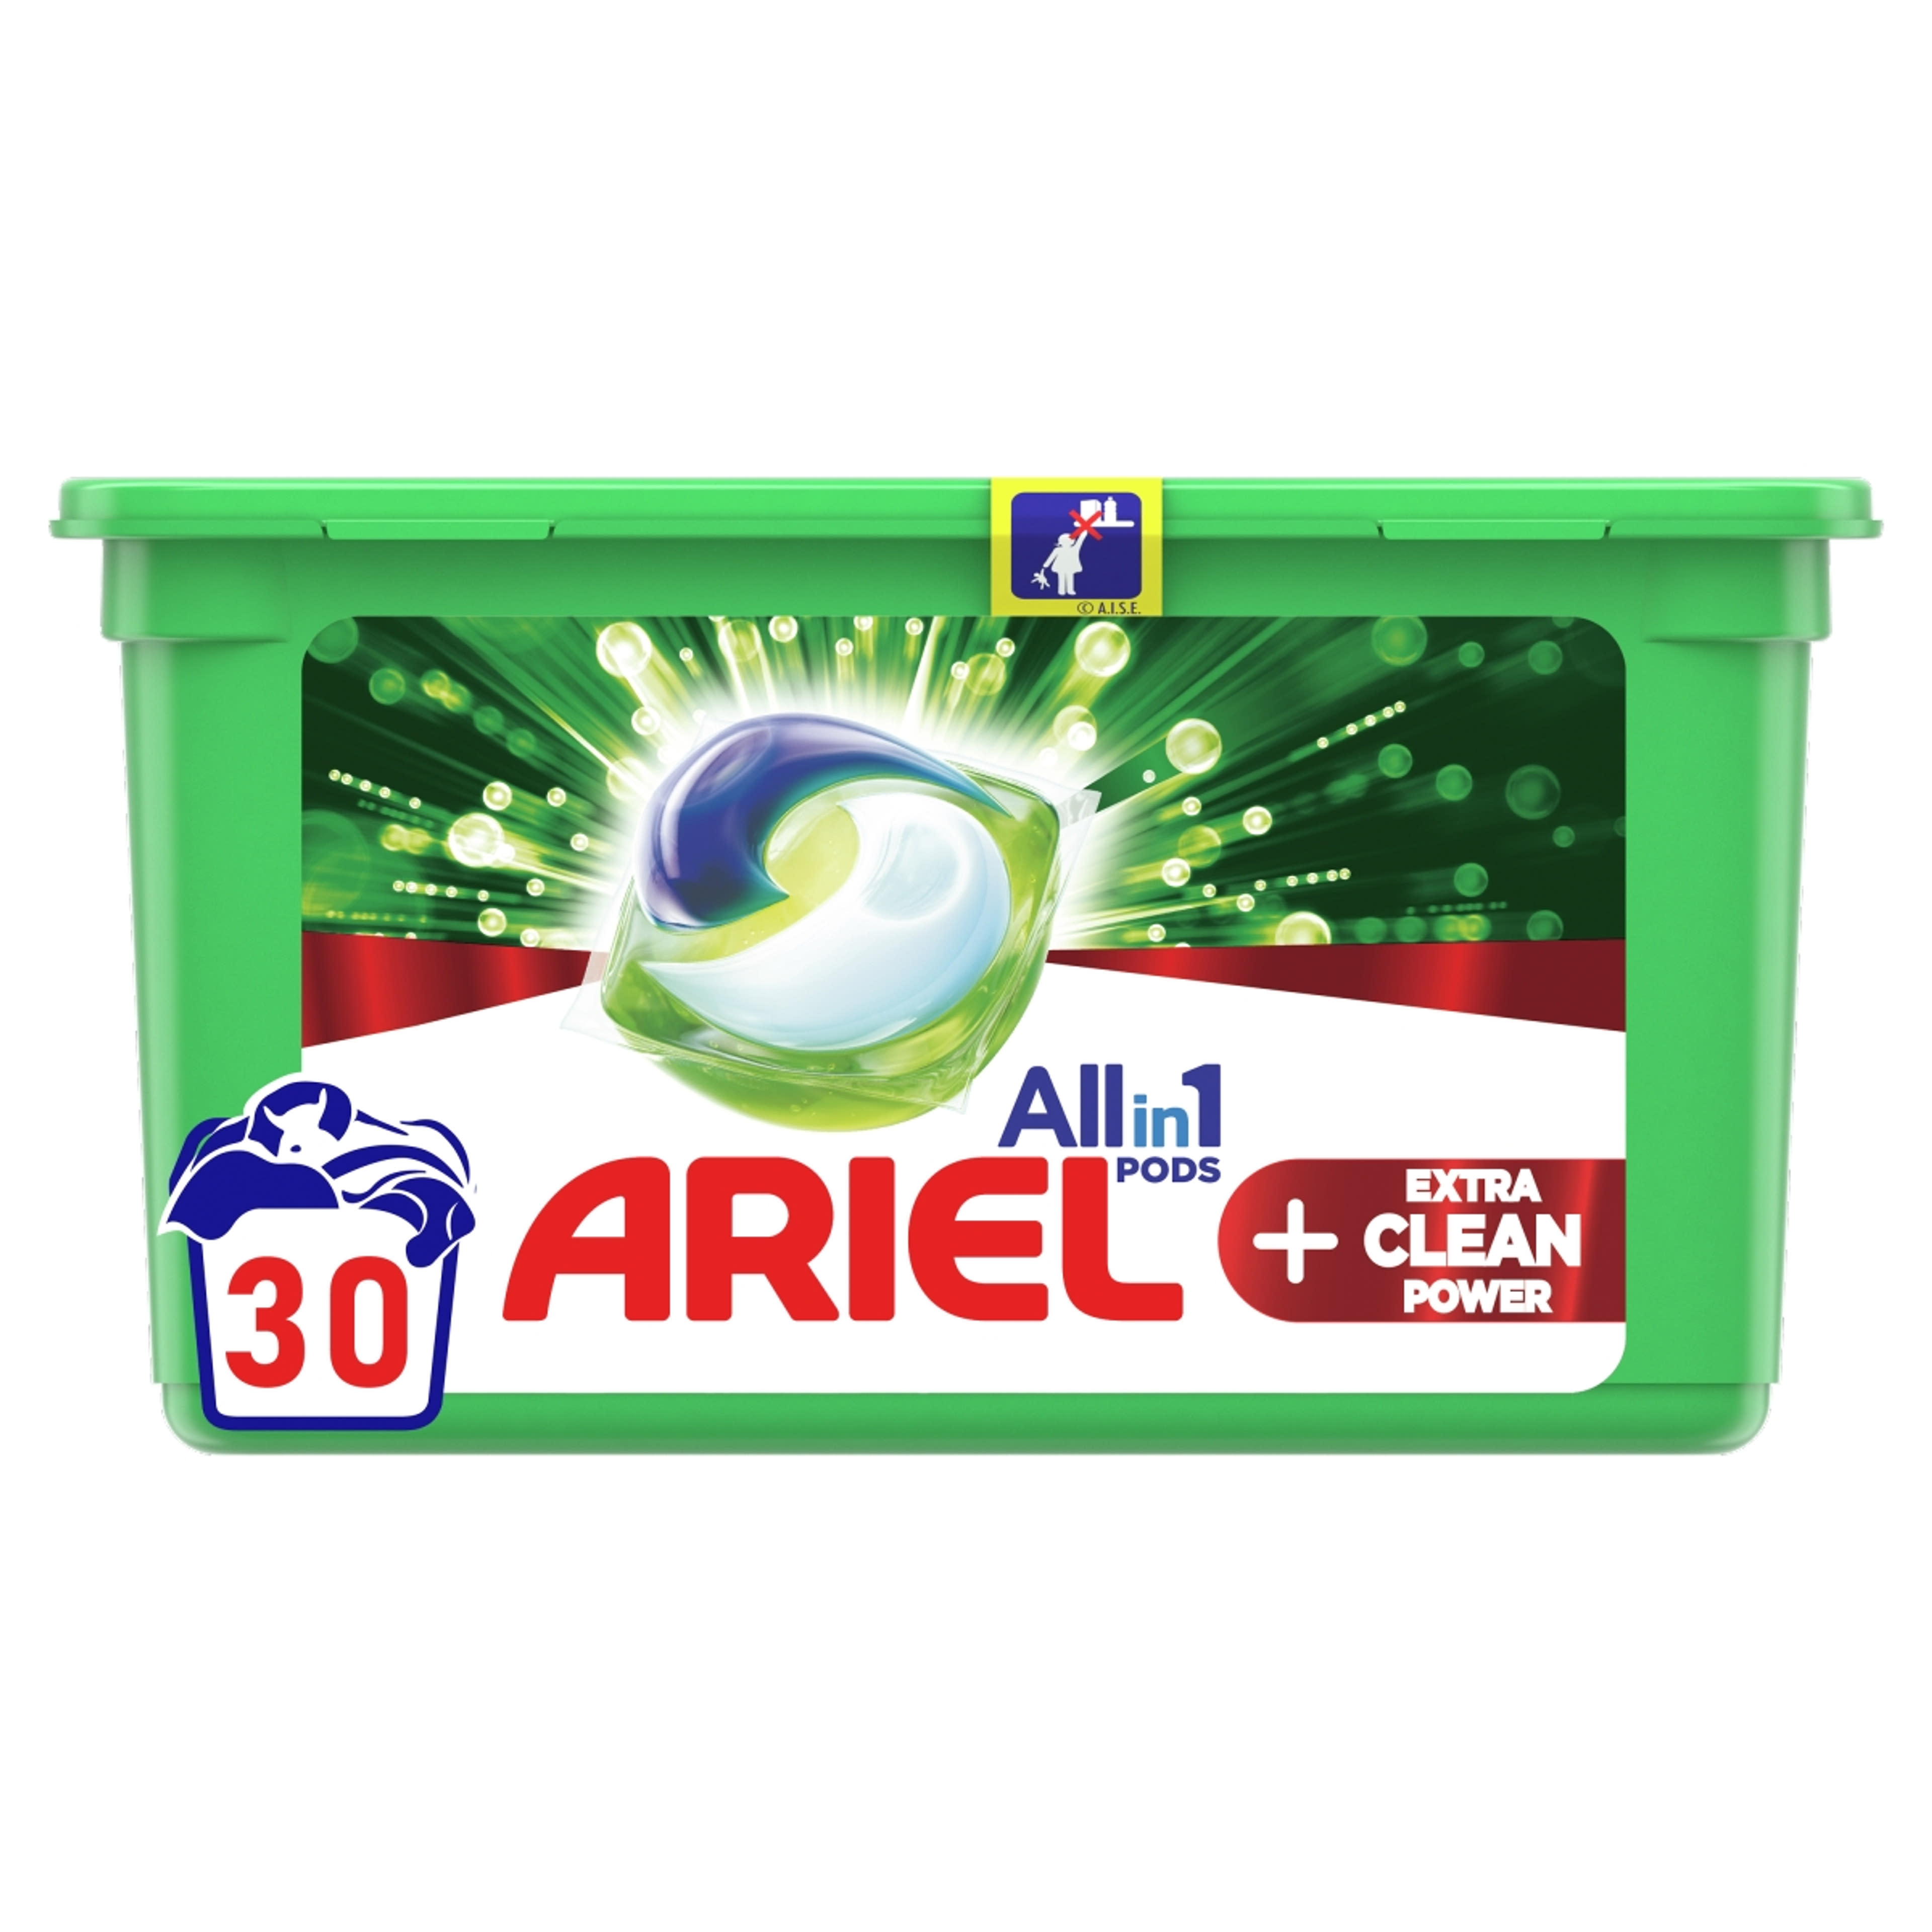 Ariel Allin1 PODS +Extra Clean Power mosókapszula - 30 db-2